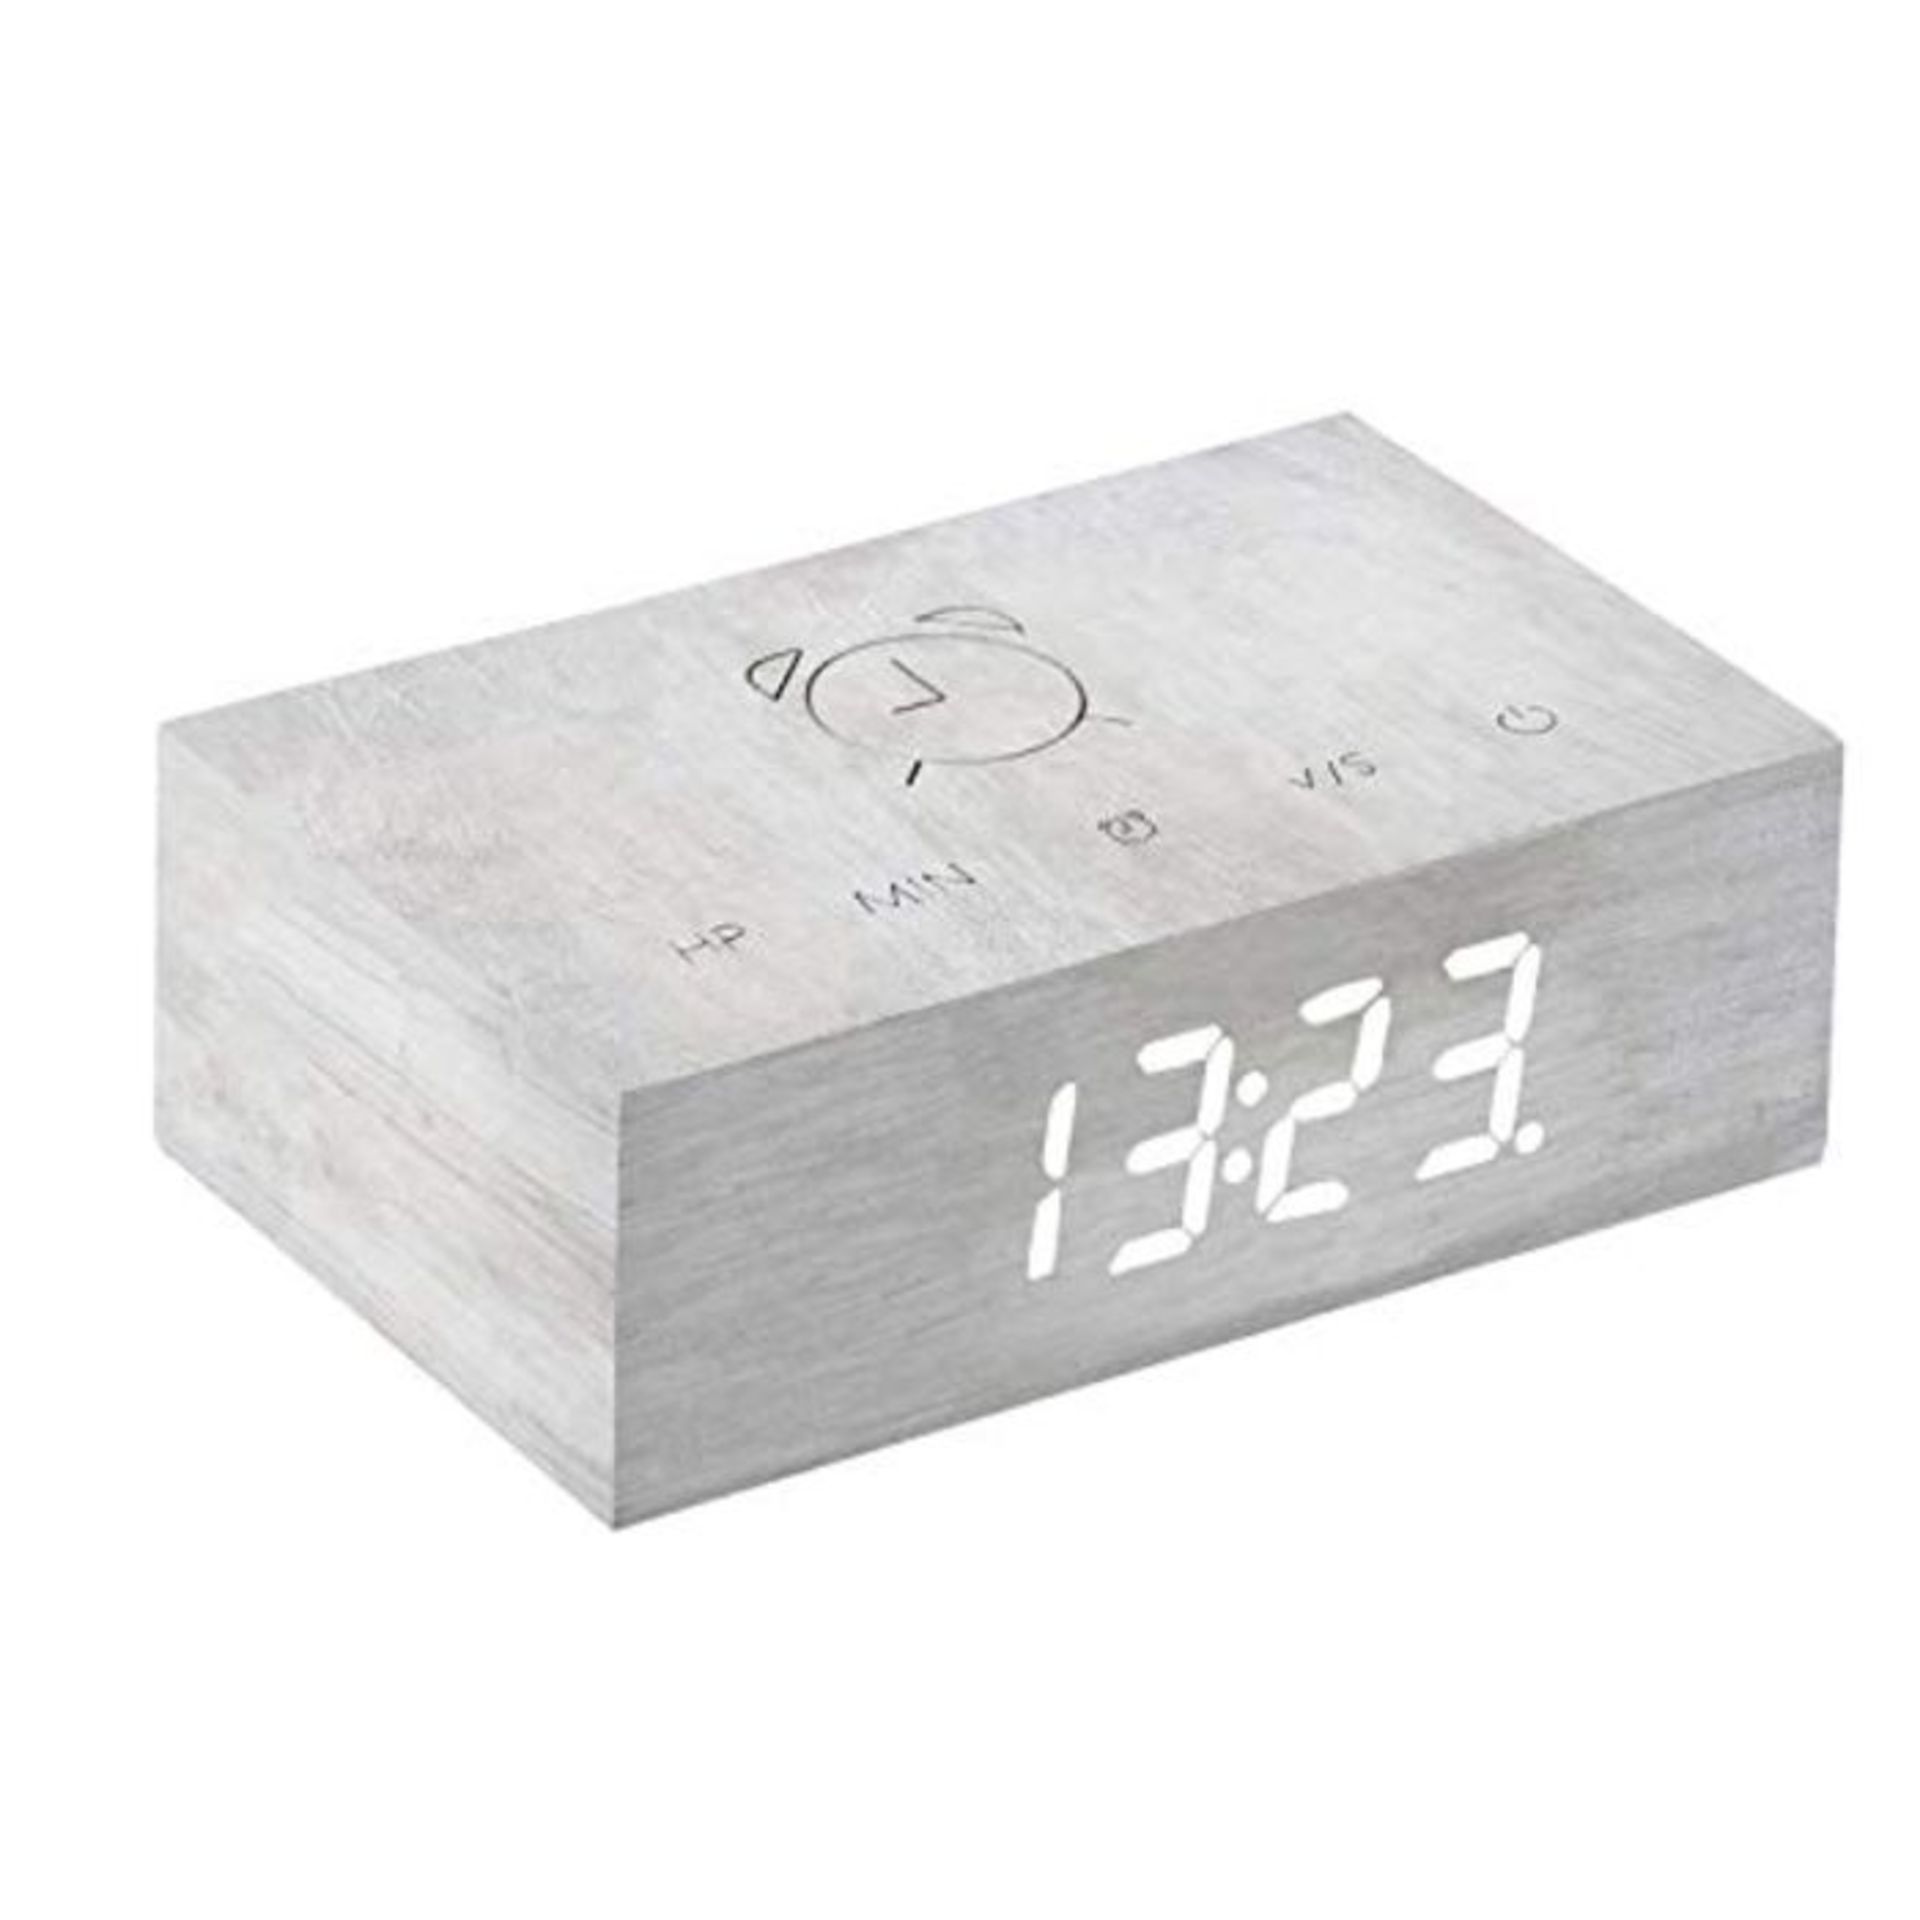 Gingko Design G003W13 Alarm Clock, Wood, White Birch, Full